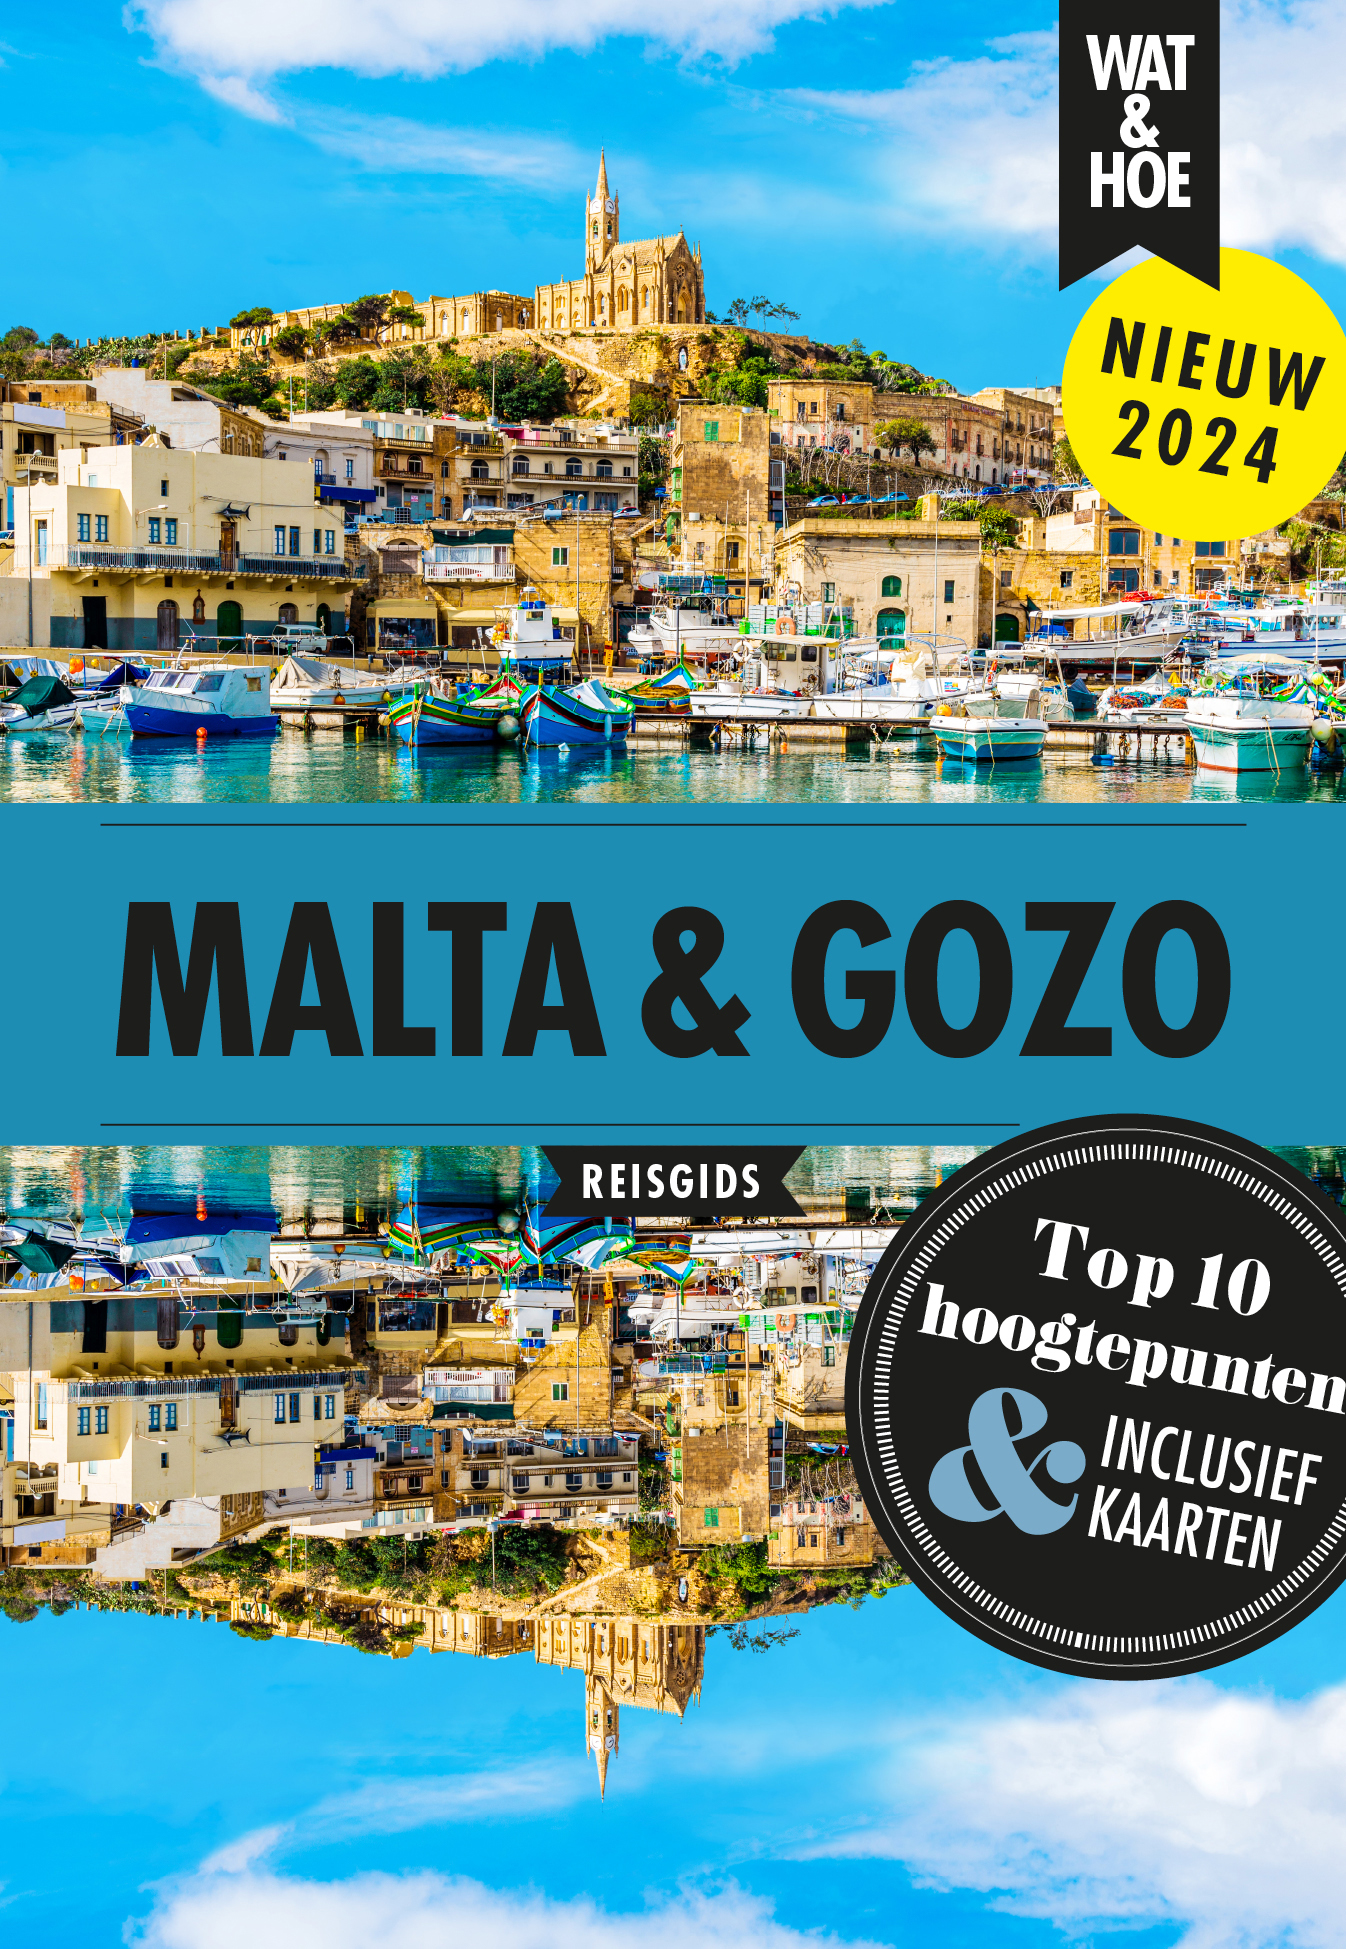 Online bestellen: Reisgids Wat & Hoe Reisgids Malta & Gozo | Kosmos Uitgevers